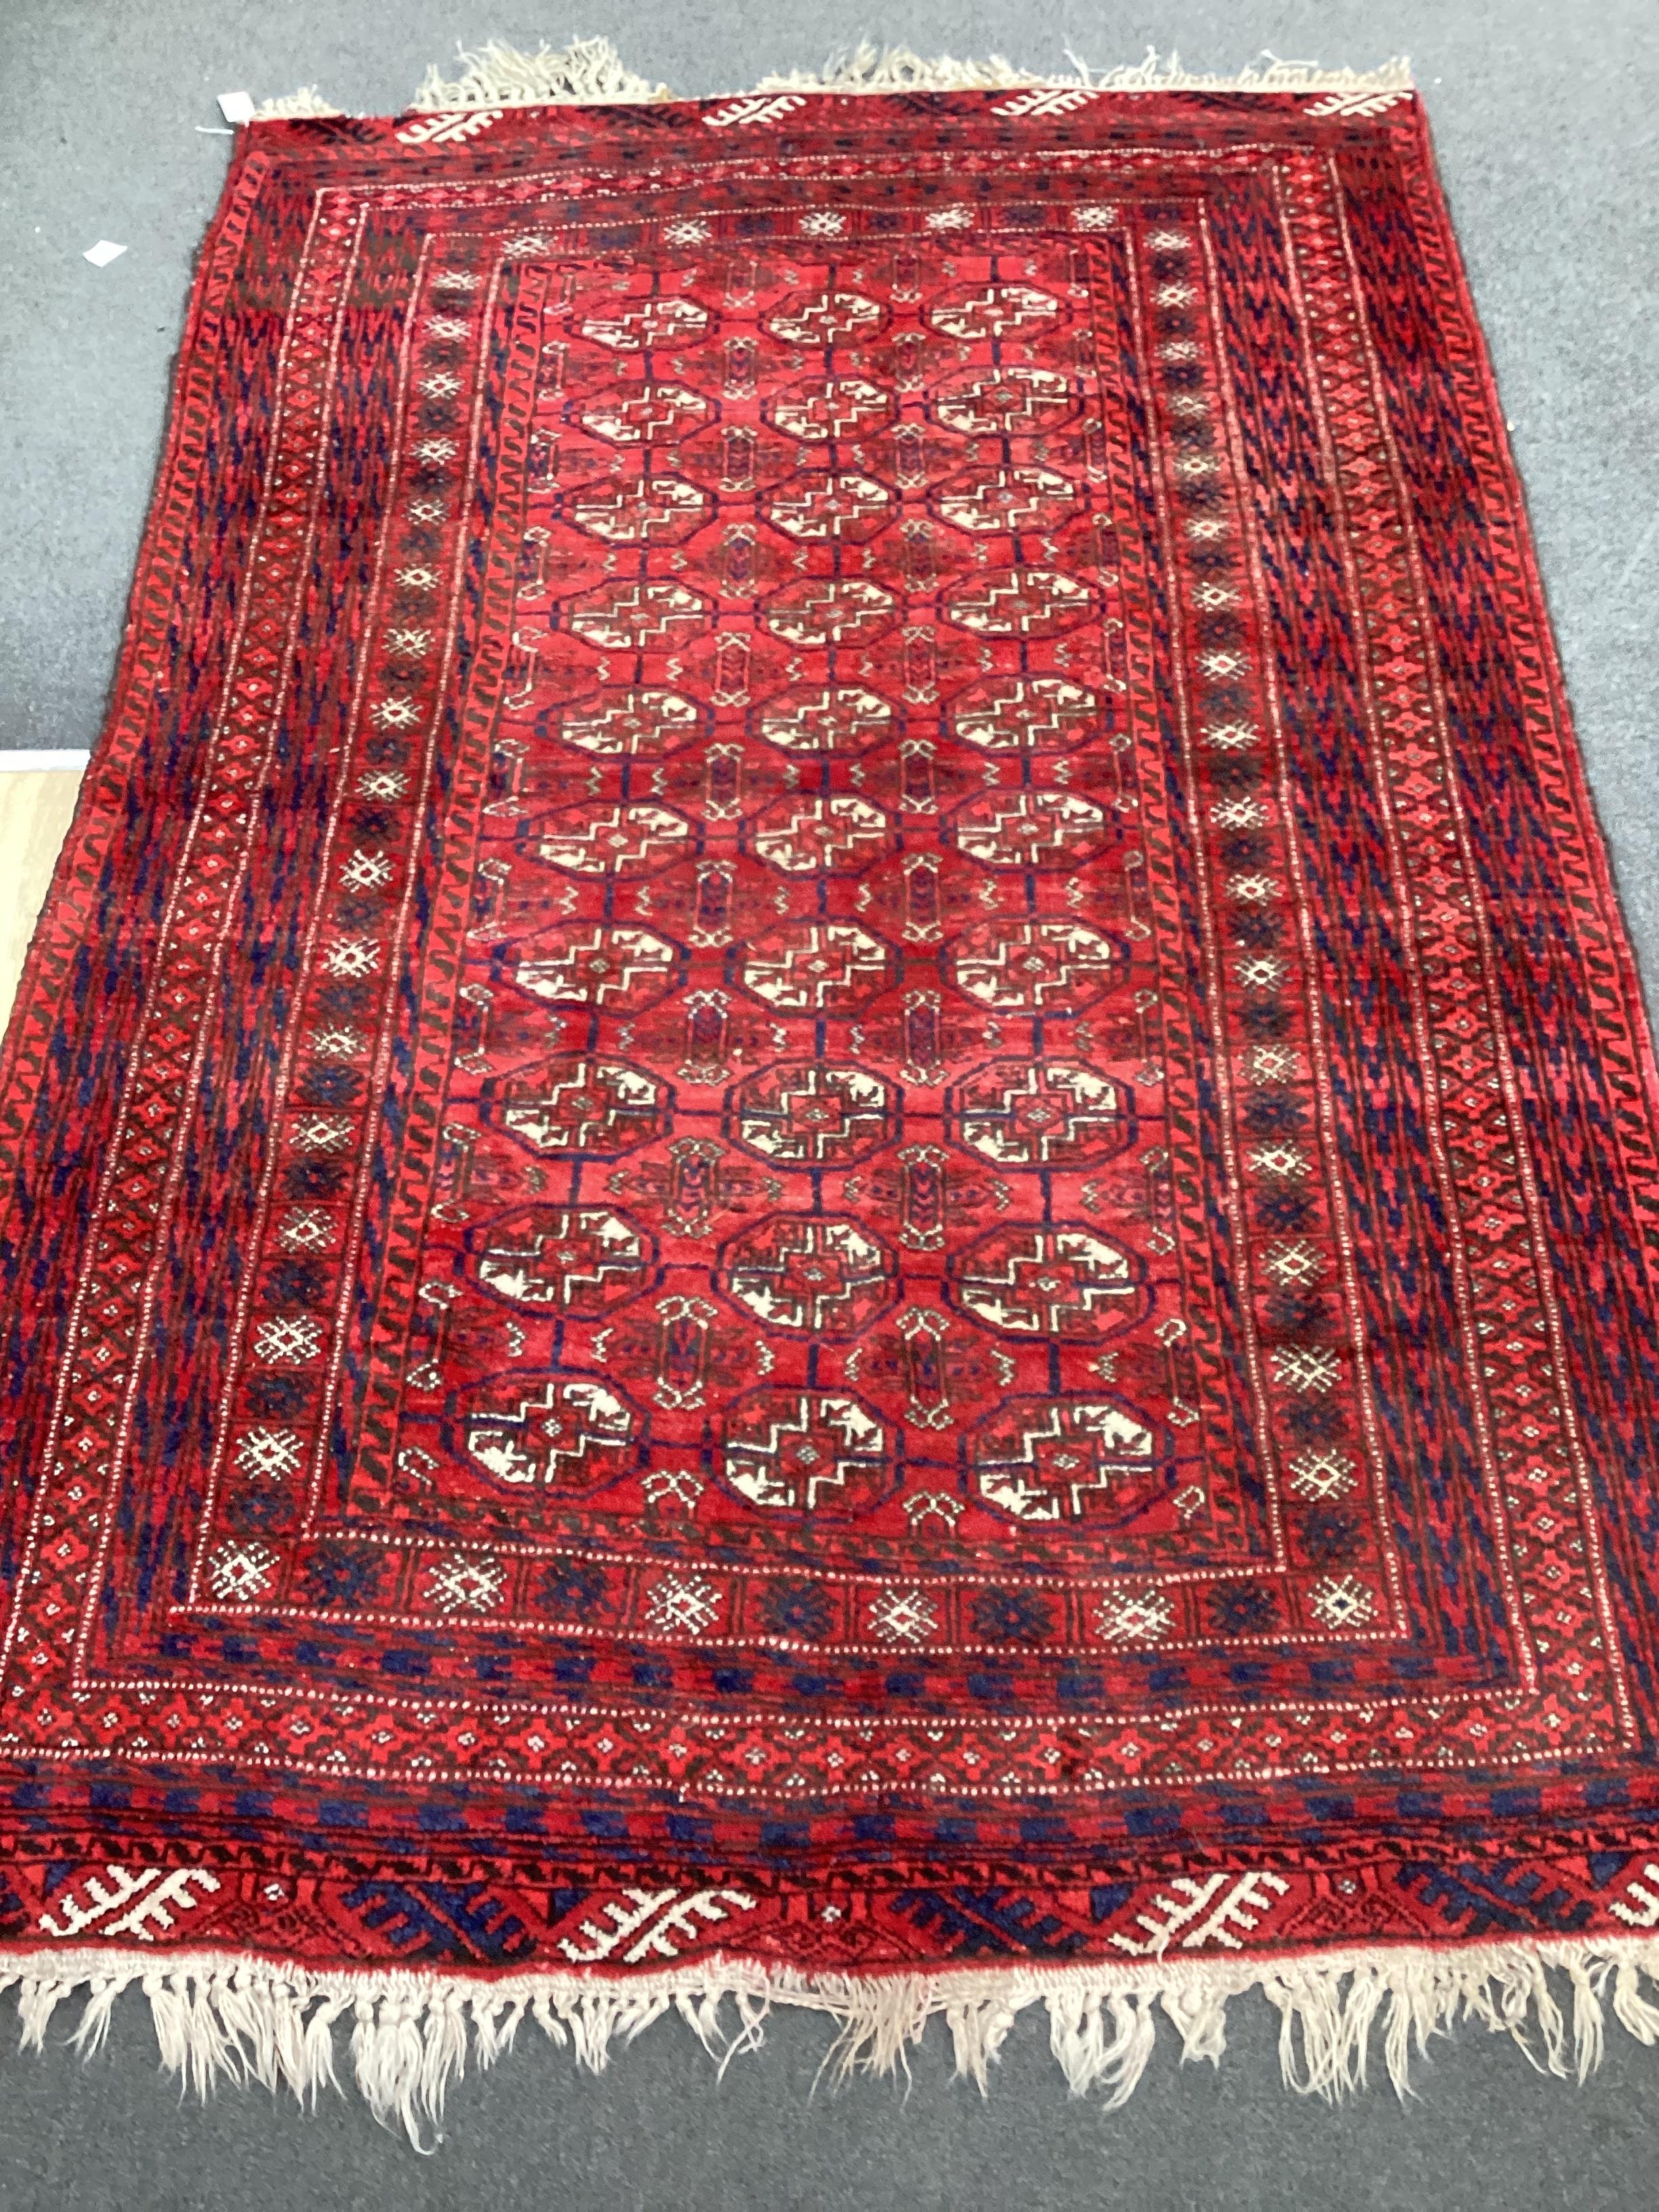 A Bokhara red ground rug, 210cm x 146cm